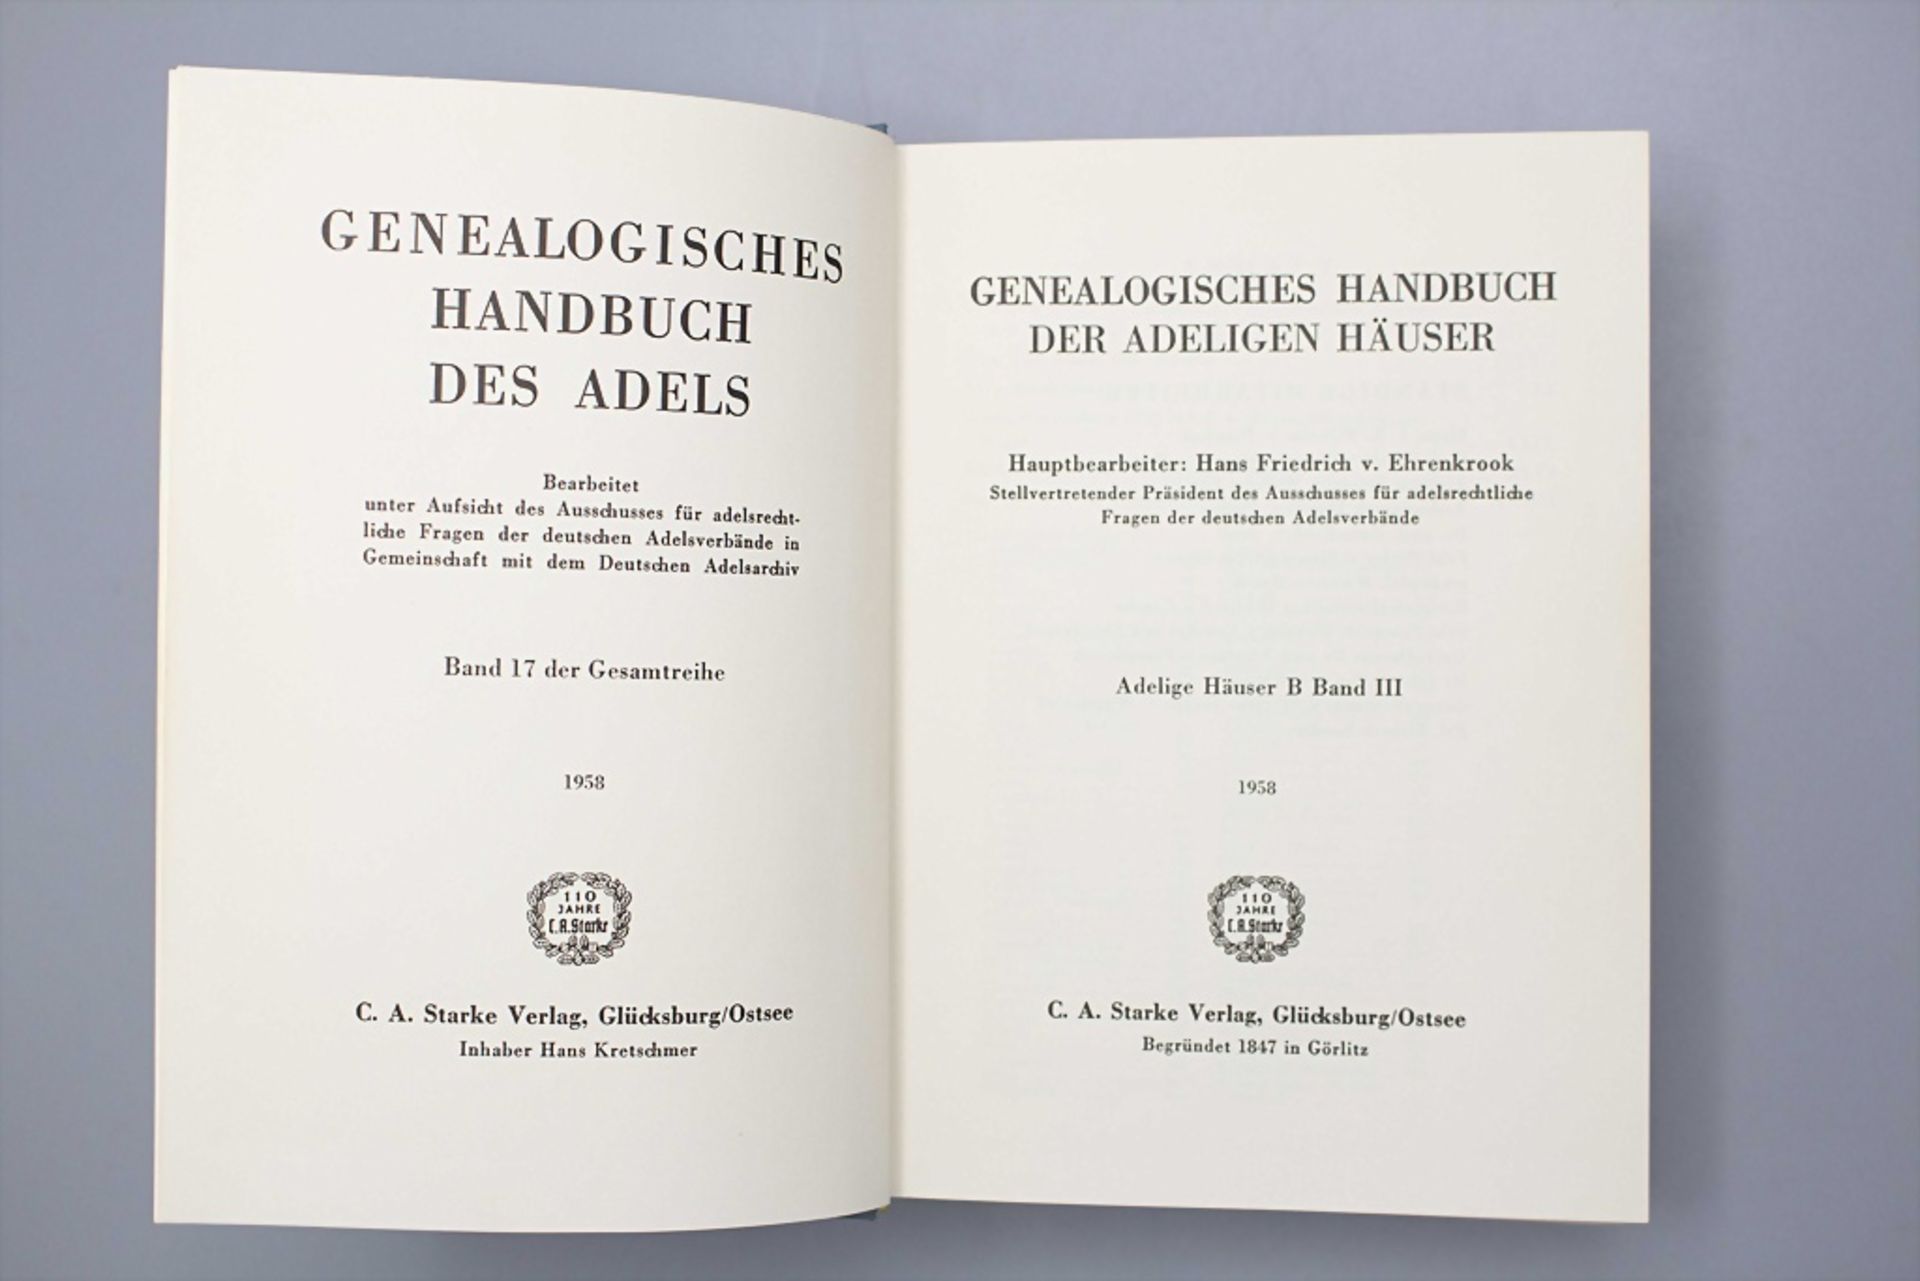 Genealogisches Handbuch des Adels Band III, Glücksburg, 1958 - Image 2 of 6